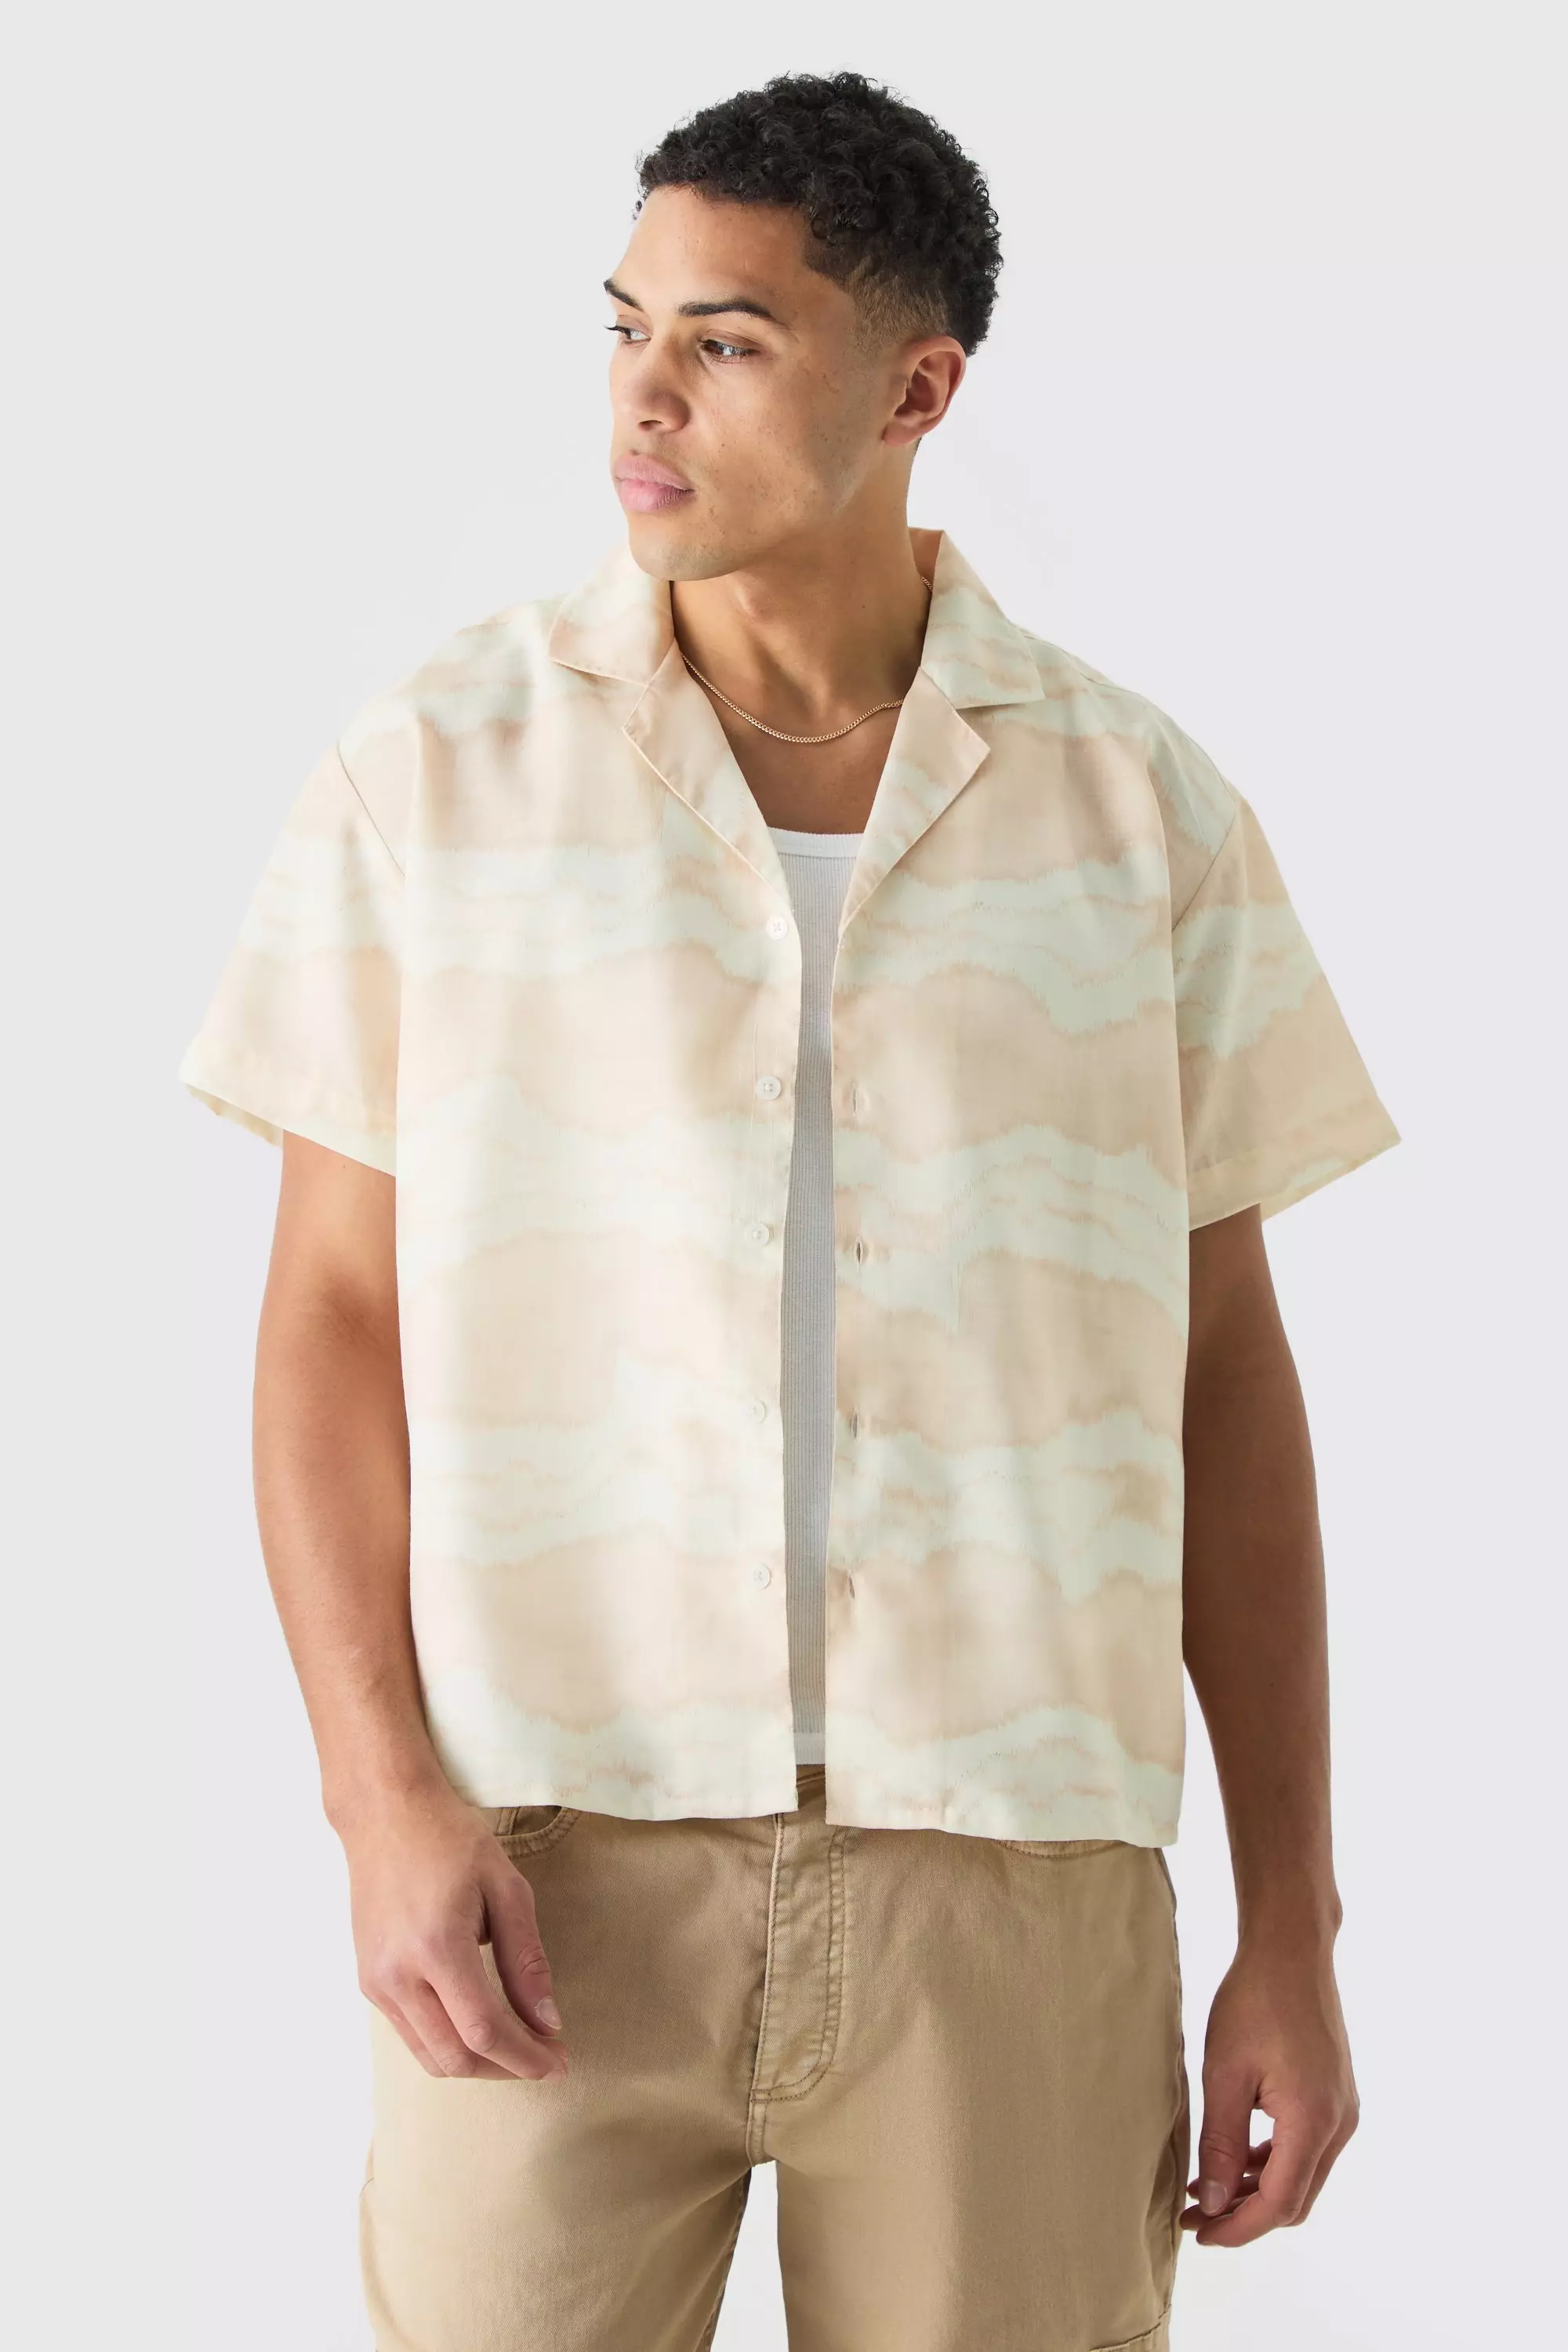 Short Sleeve Boxy Slub Tie Dye Stripe Shirt Beige